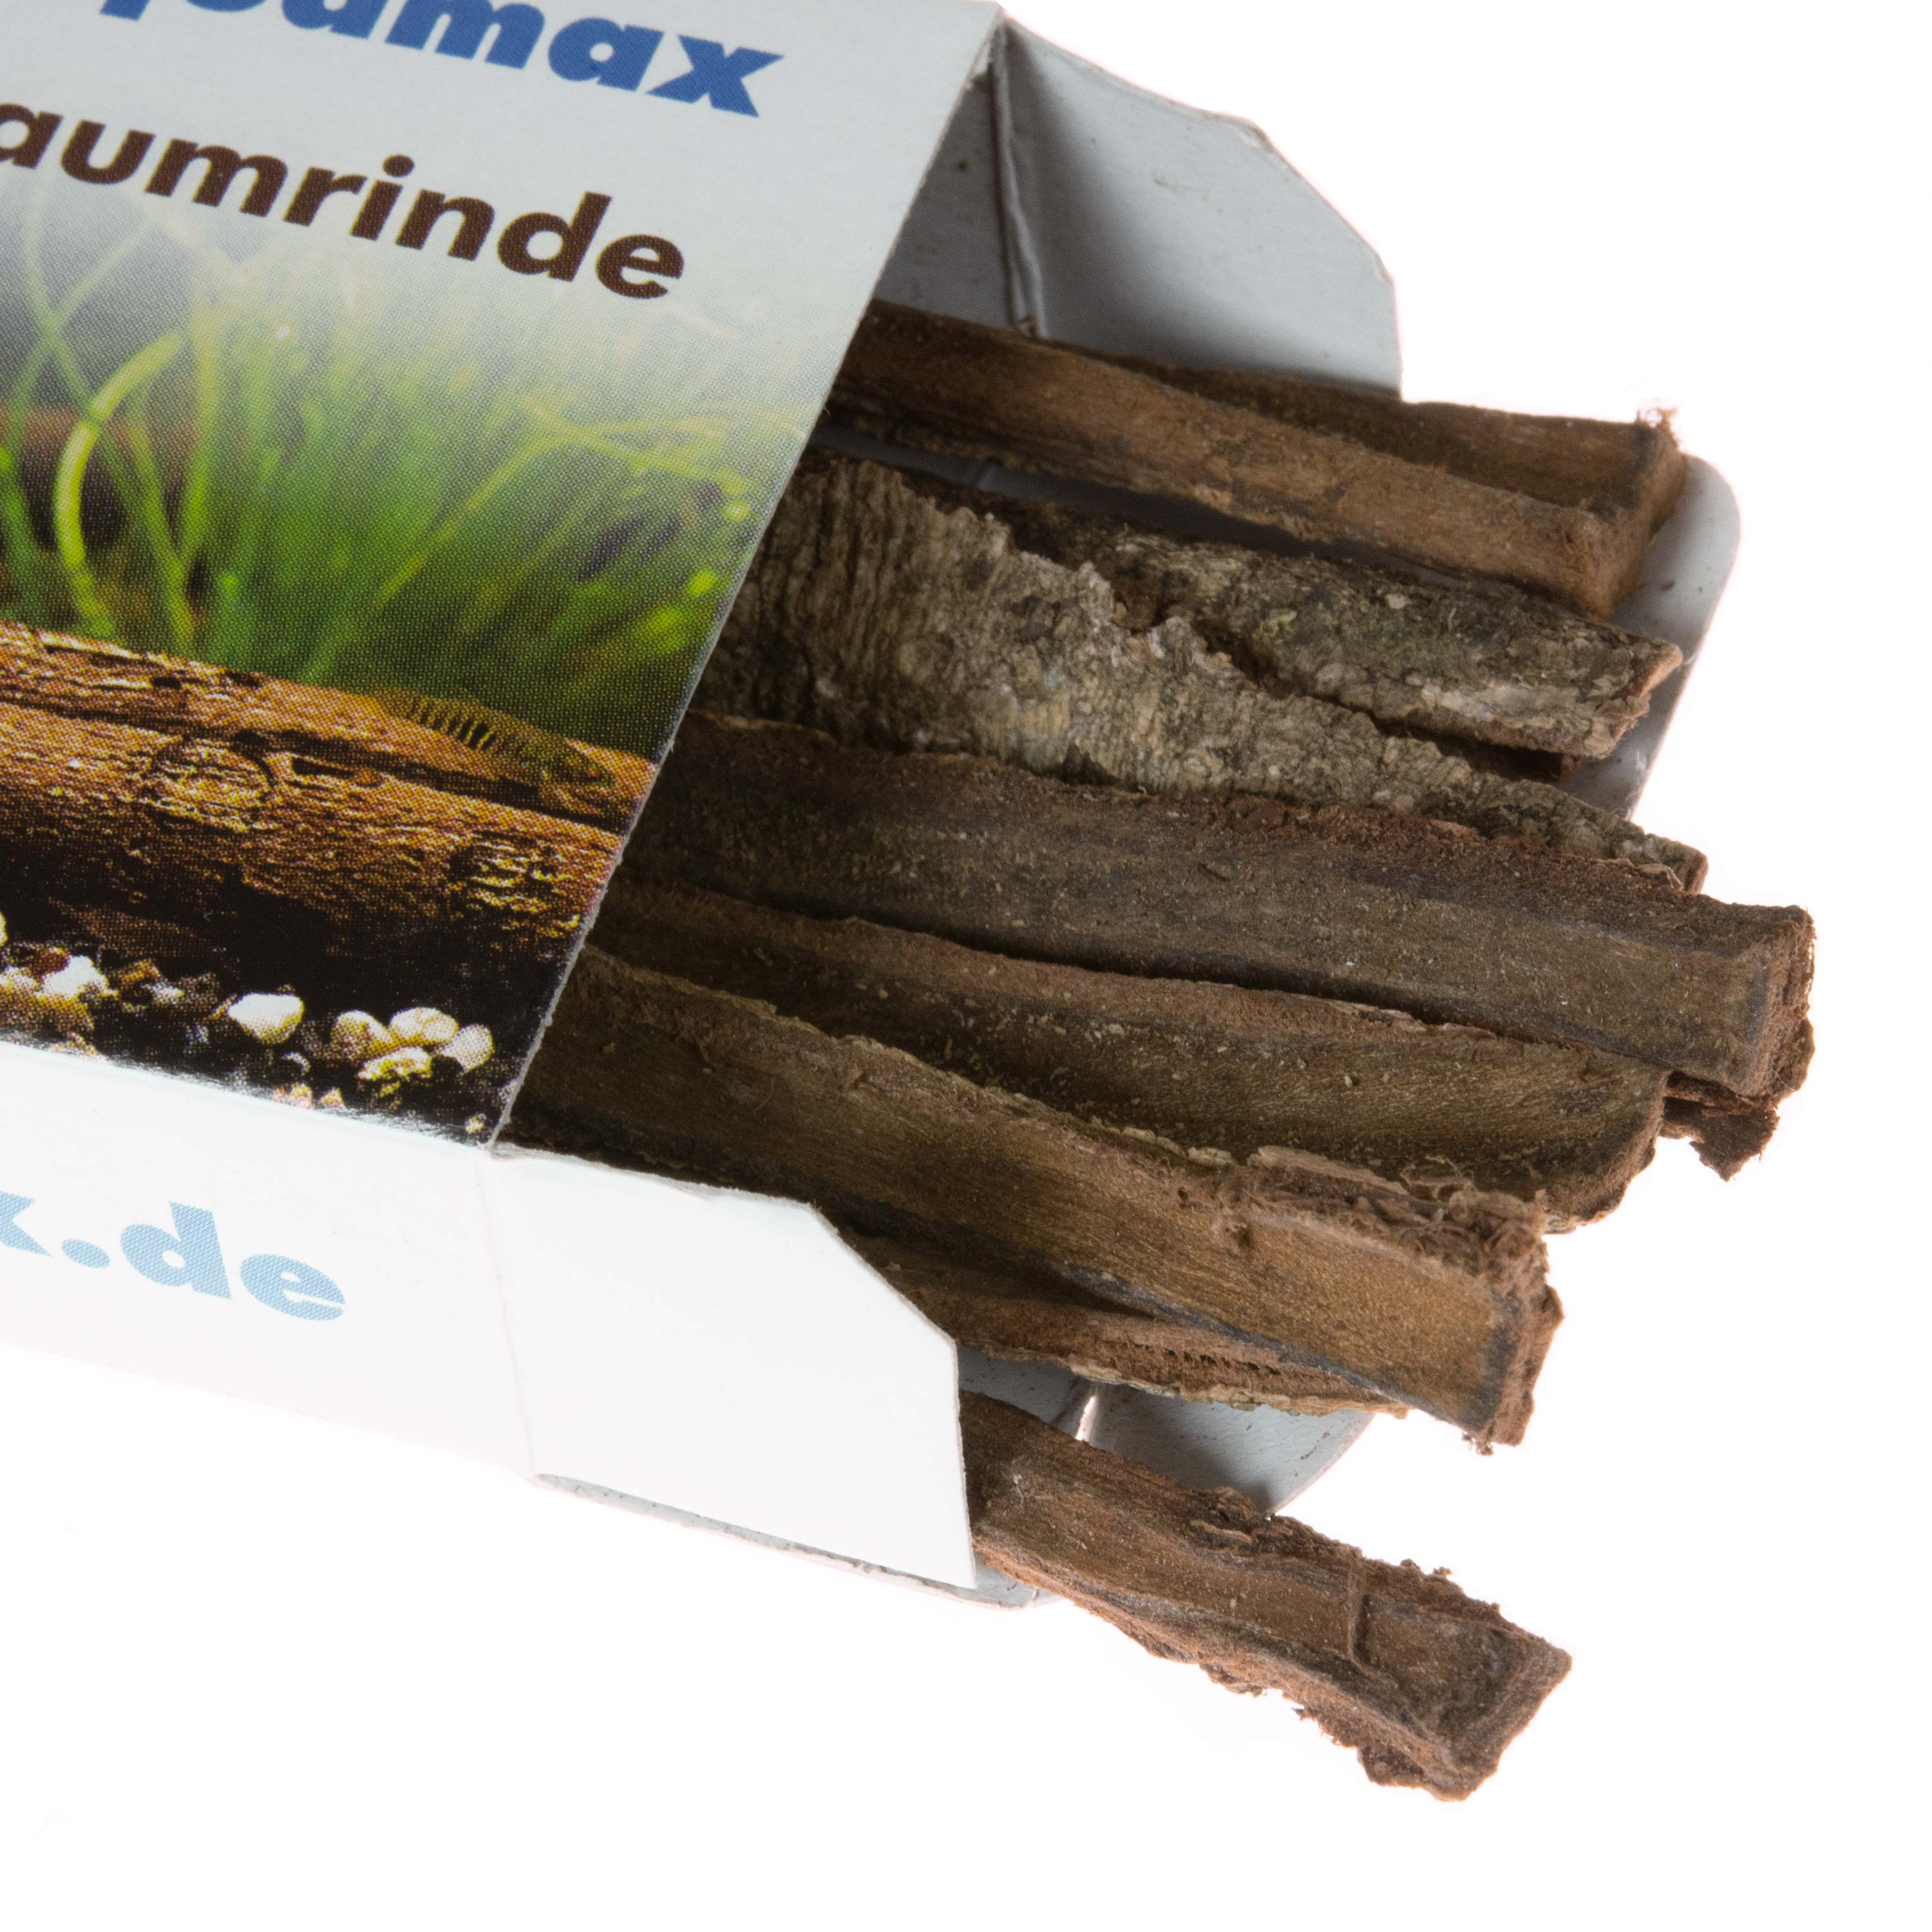 Nano Tropical Almond Bark aquamax - opened pack